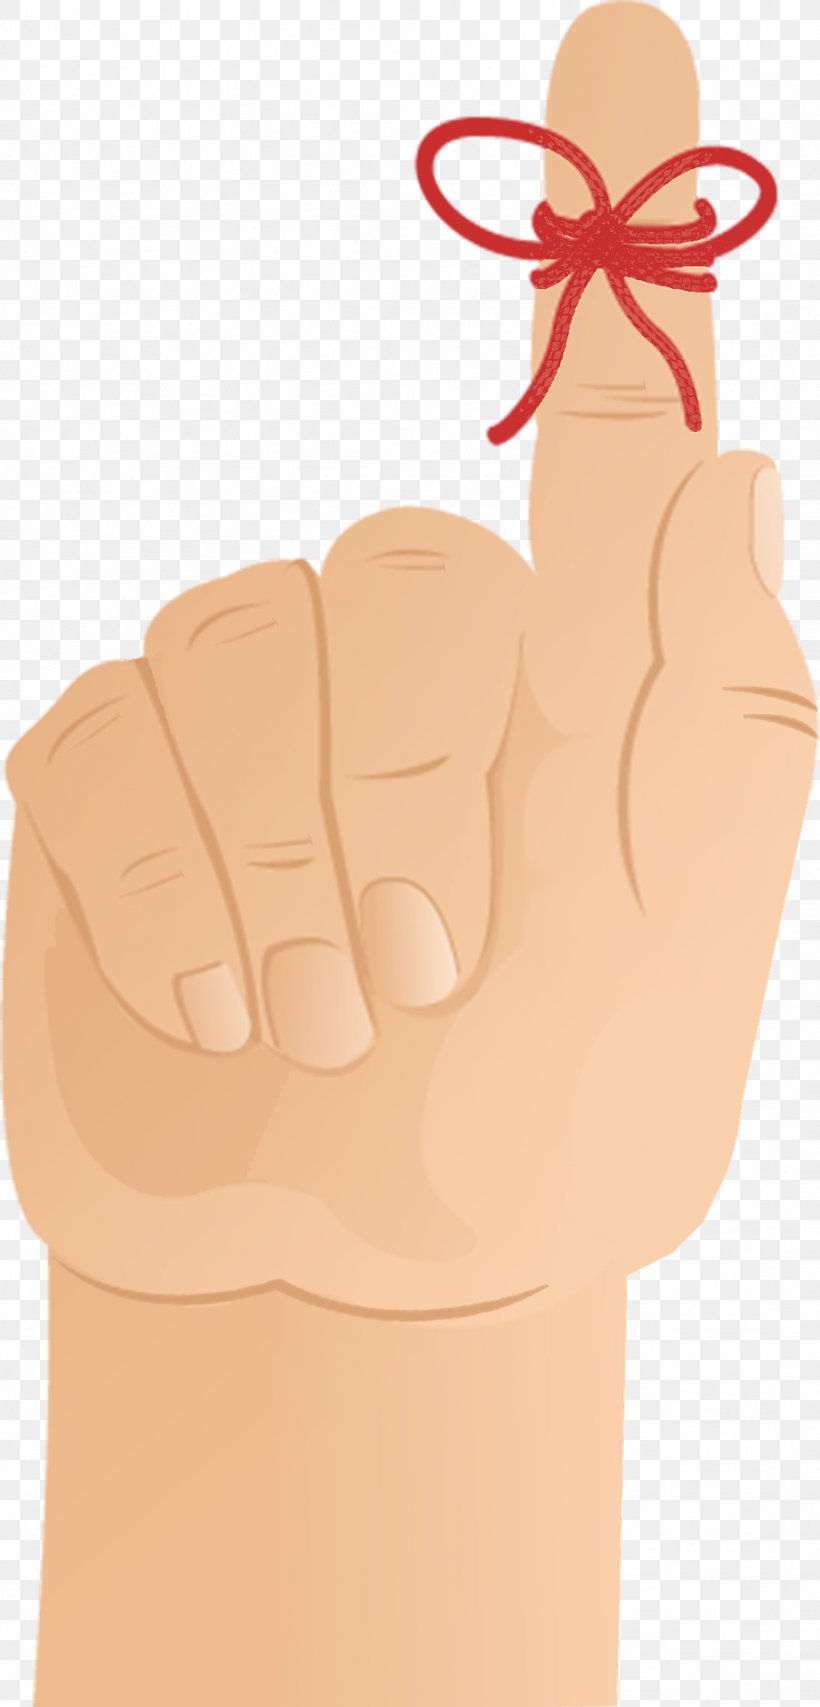 Index Finger Thumb, PNG, 922x1920px, Finger, Arm, Hand, Hand Model, Index Finger Download Free